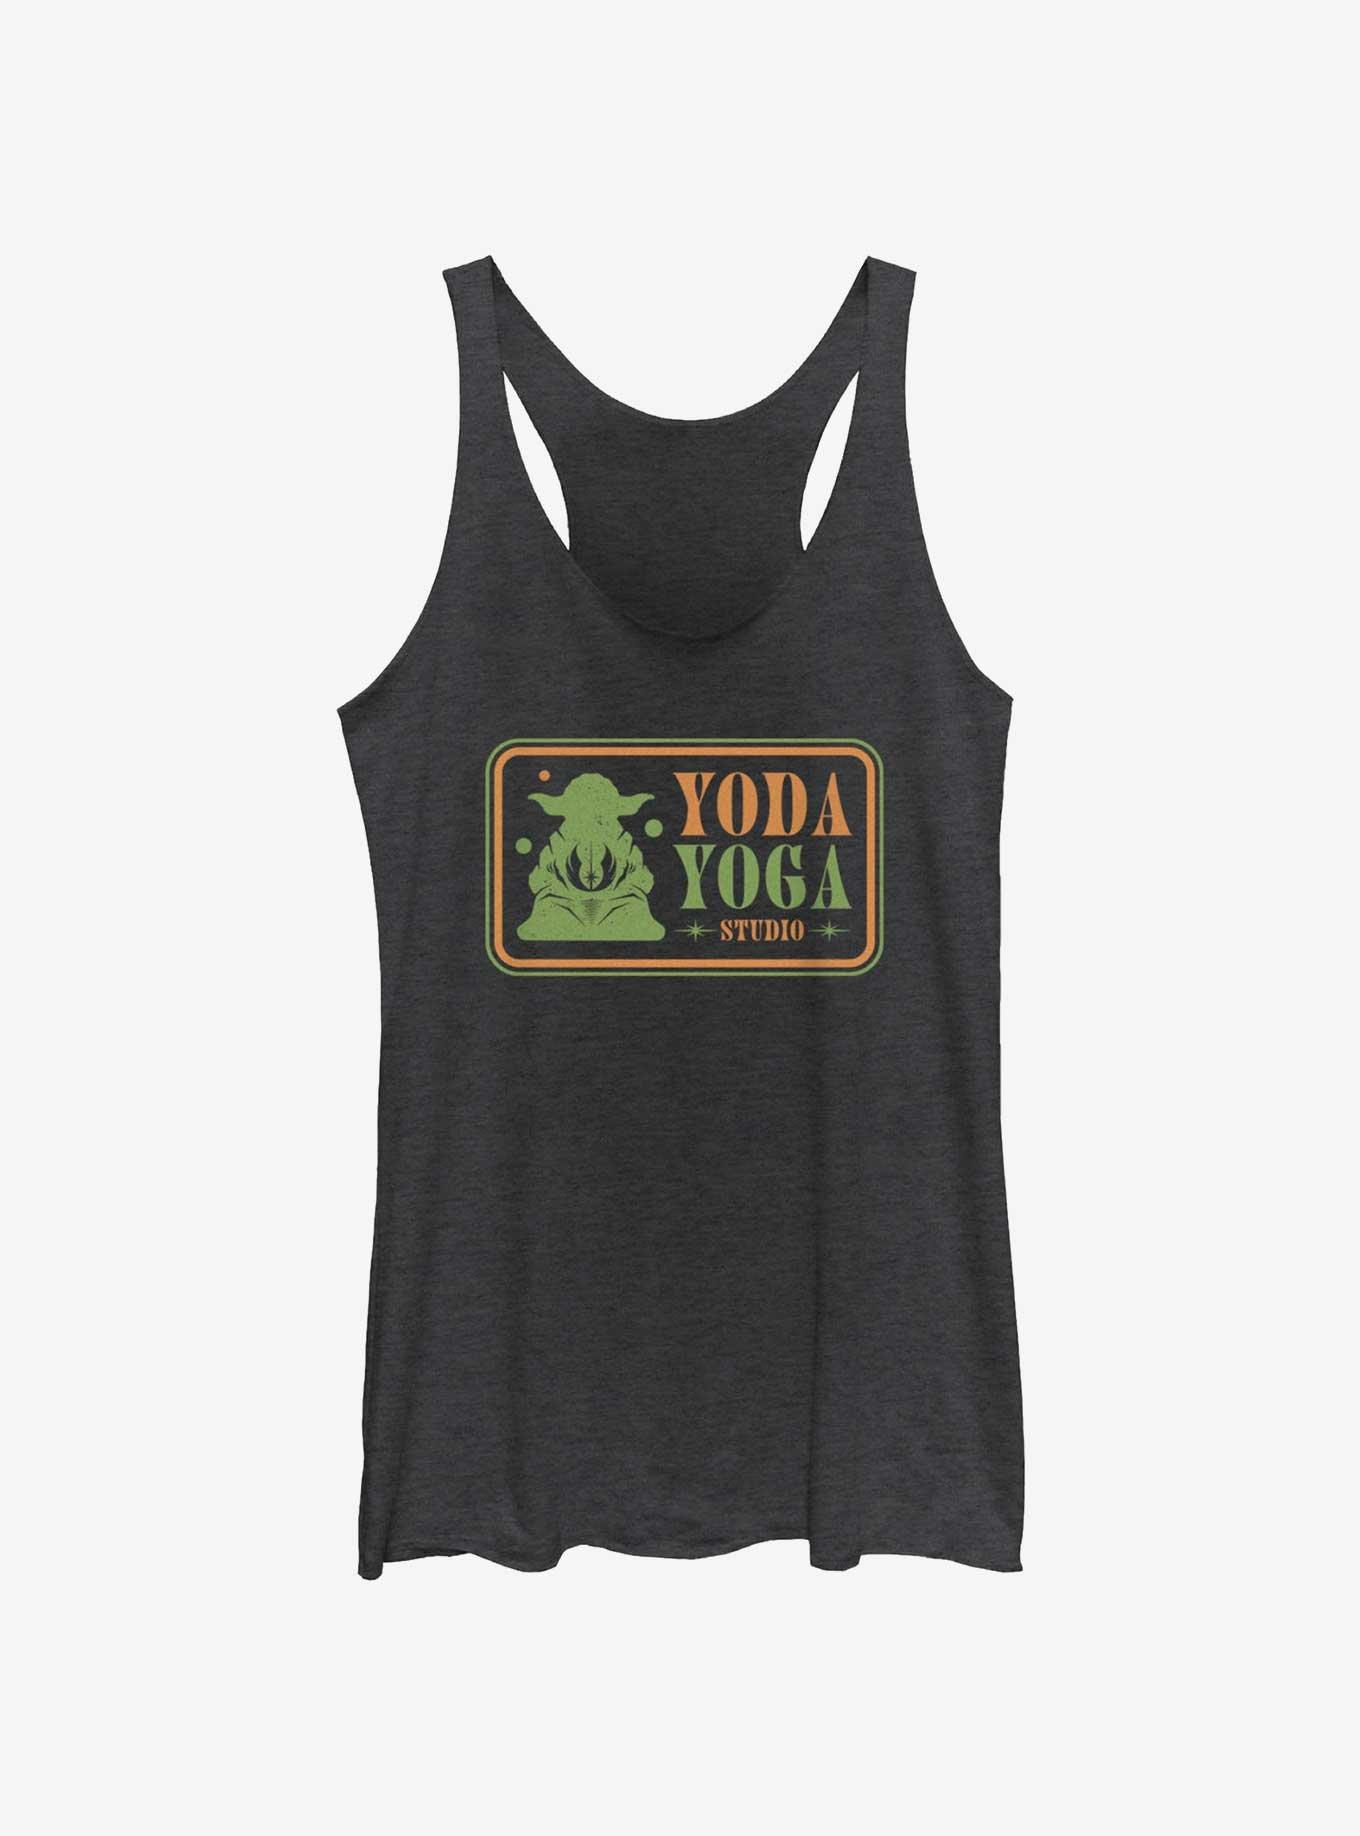 Star Wars Yoda Yoga Studio Girls Tank